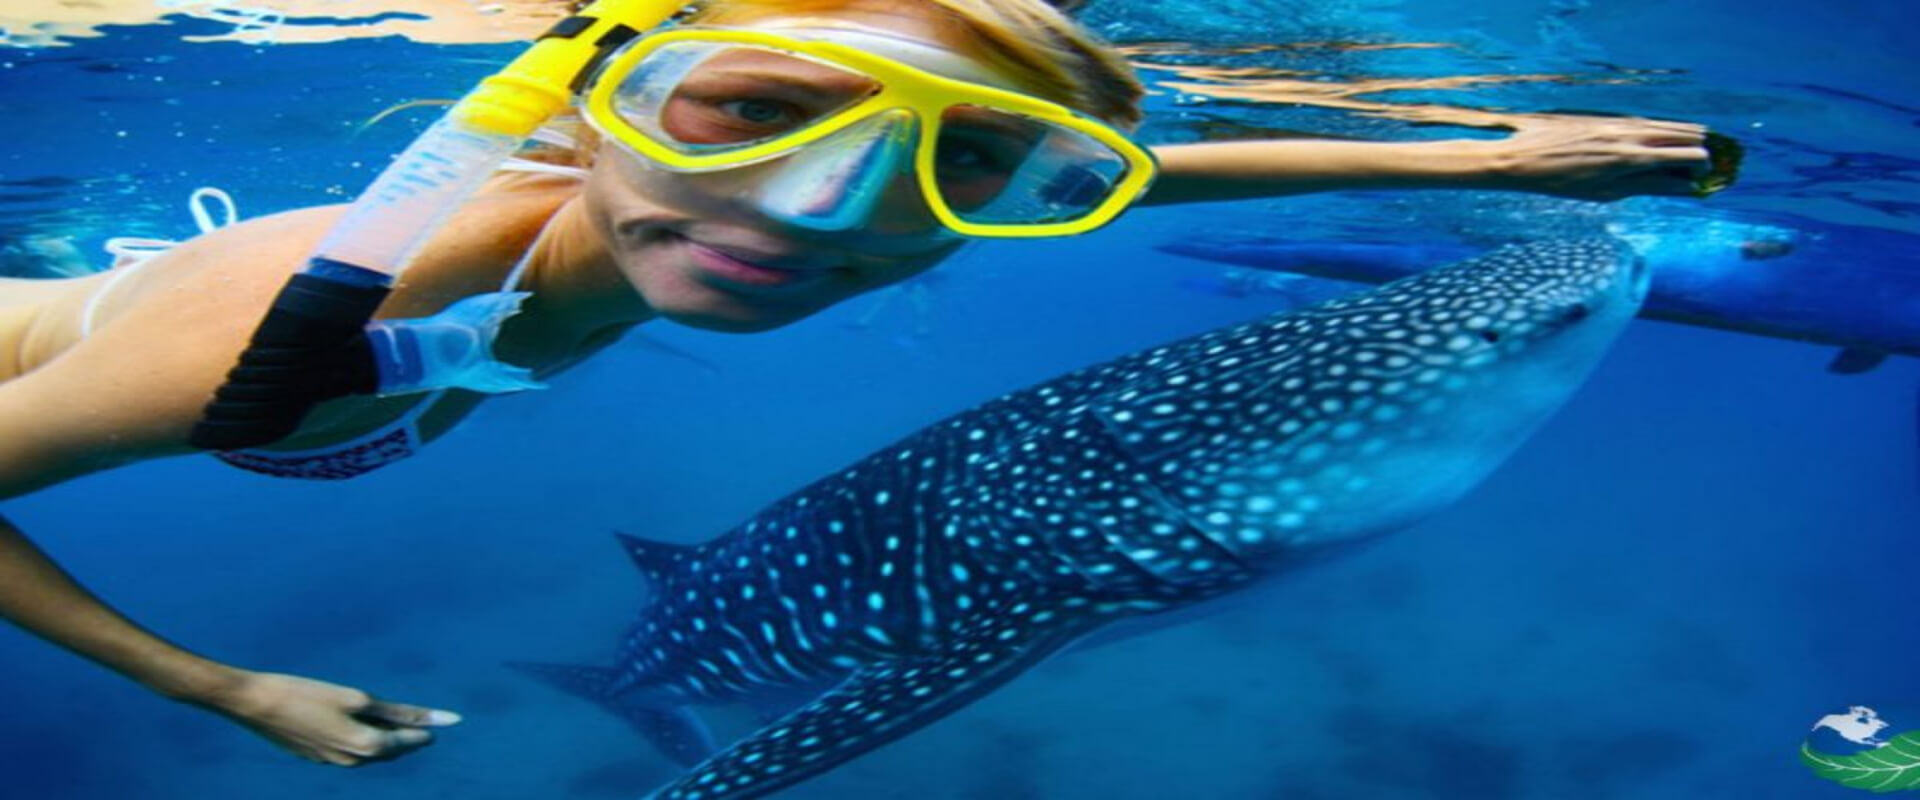 Caño Island Snorkeling Tour | Costa Rica Jade Tours